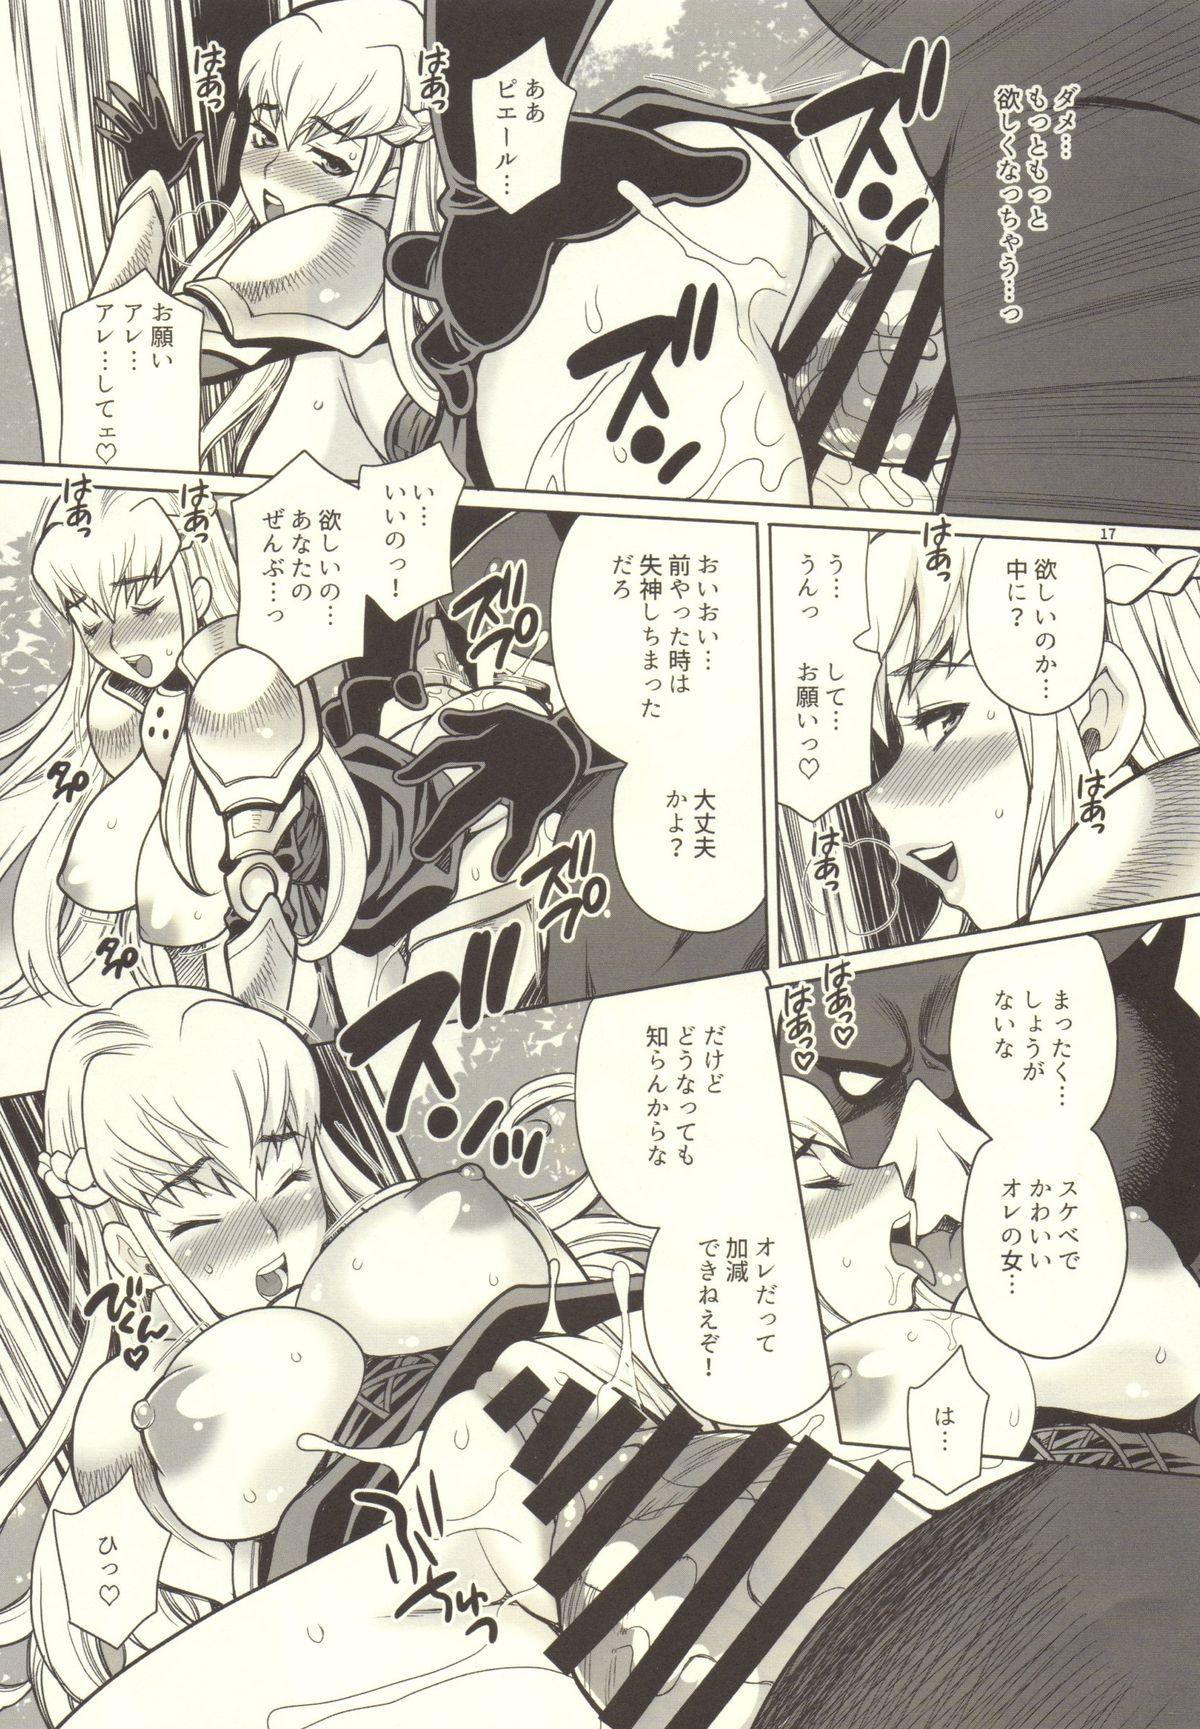 Yukiyanagi no Hon 37 Buta to Onnakishi - Lady knight in love with Orc 15